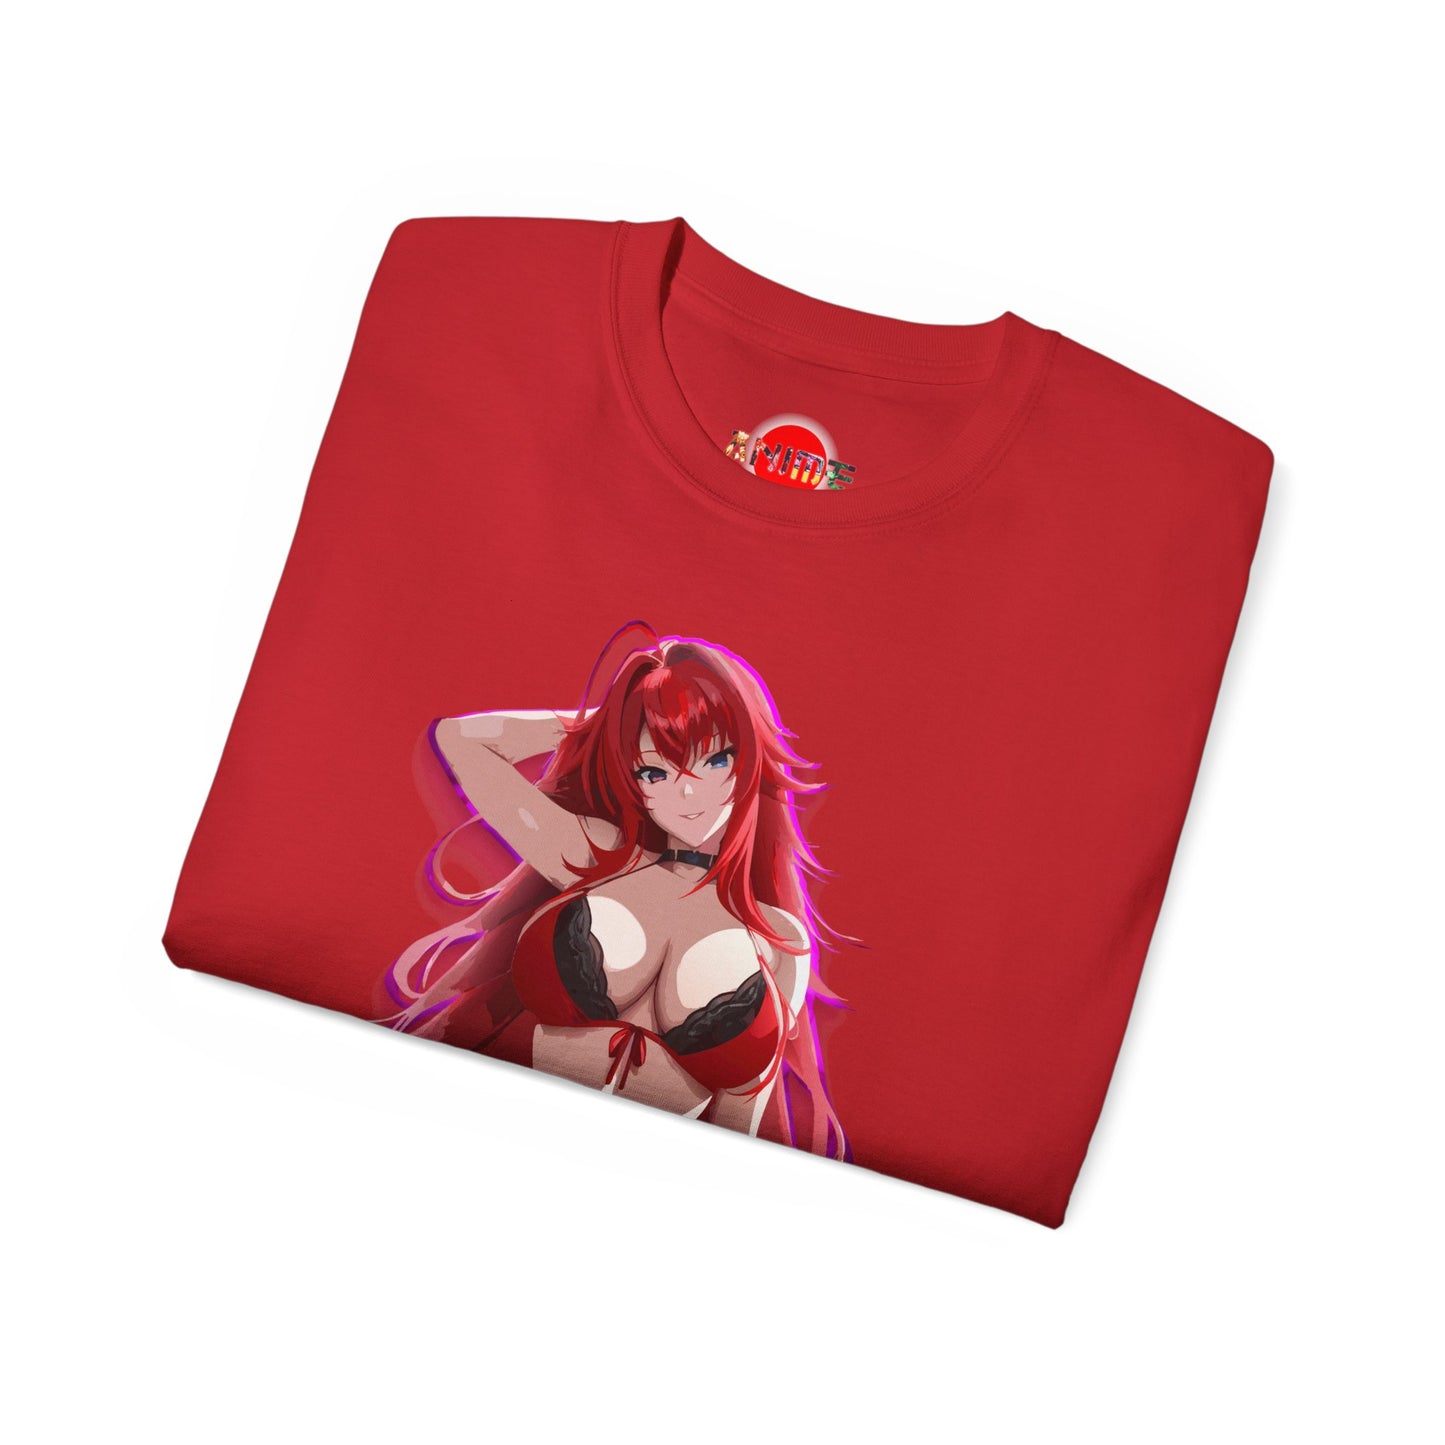 Hot Anime Girl Red Hair T-shirt Unisex Ultra Cotton Tee